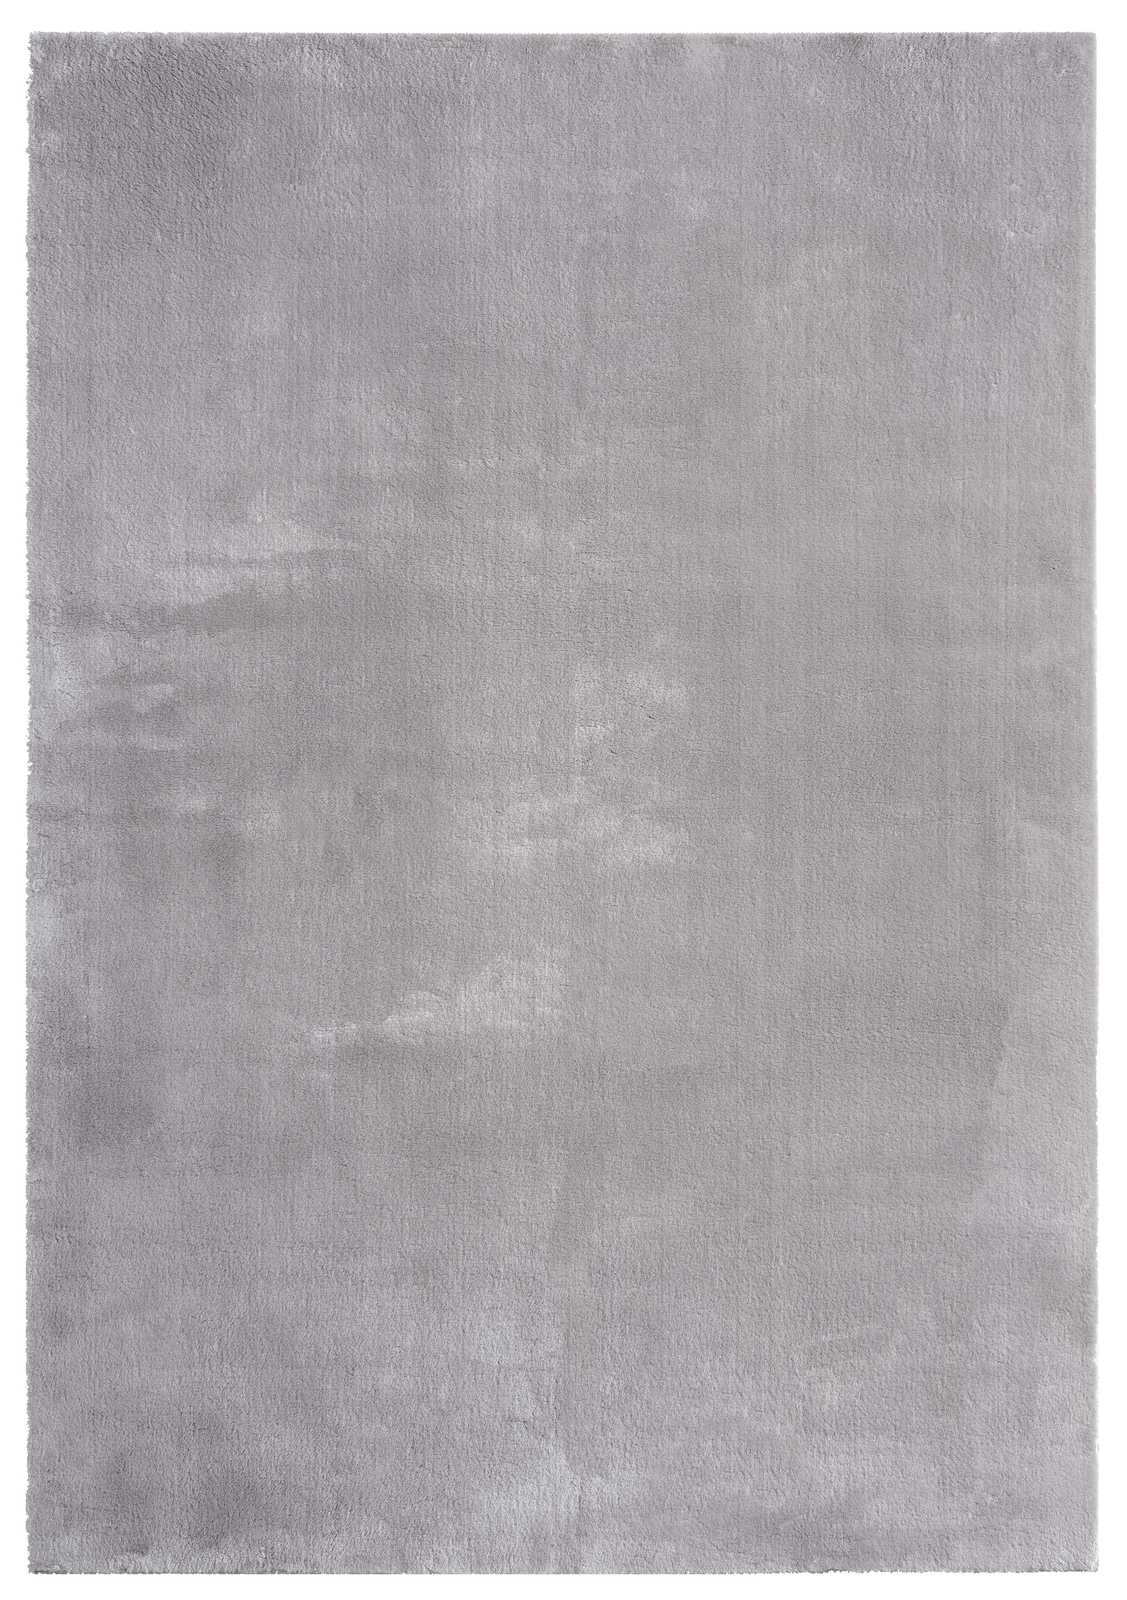             Fine high pile carpet in grey - 170 x 120 cm
        